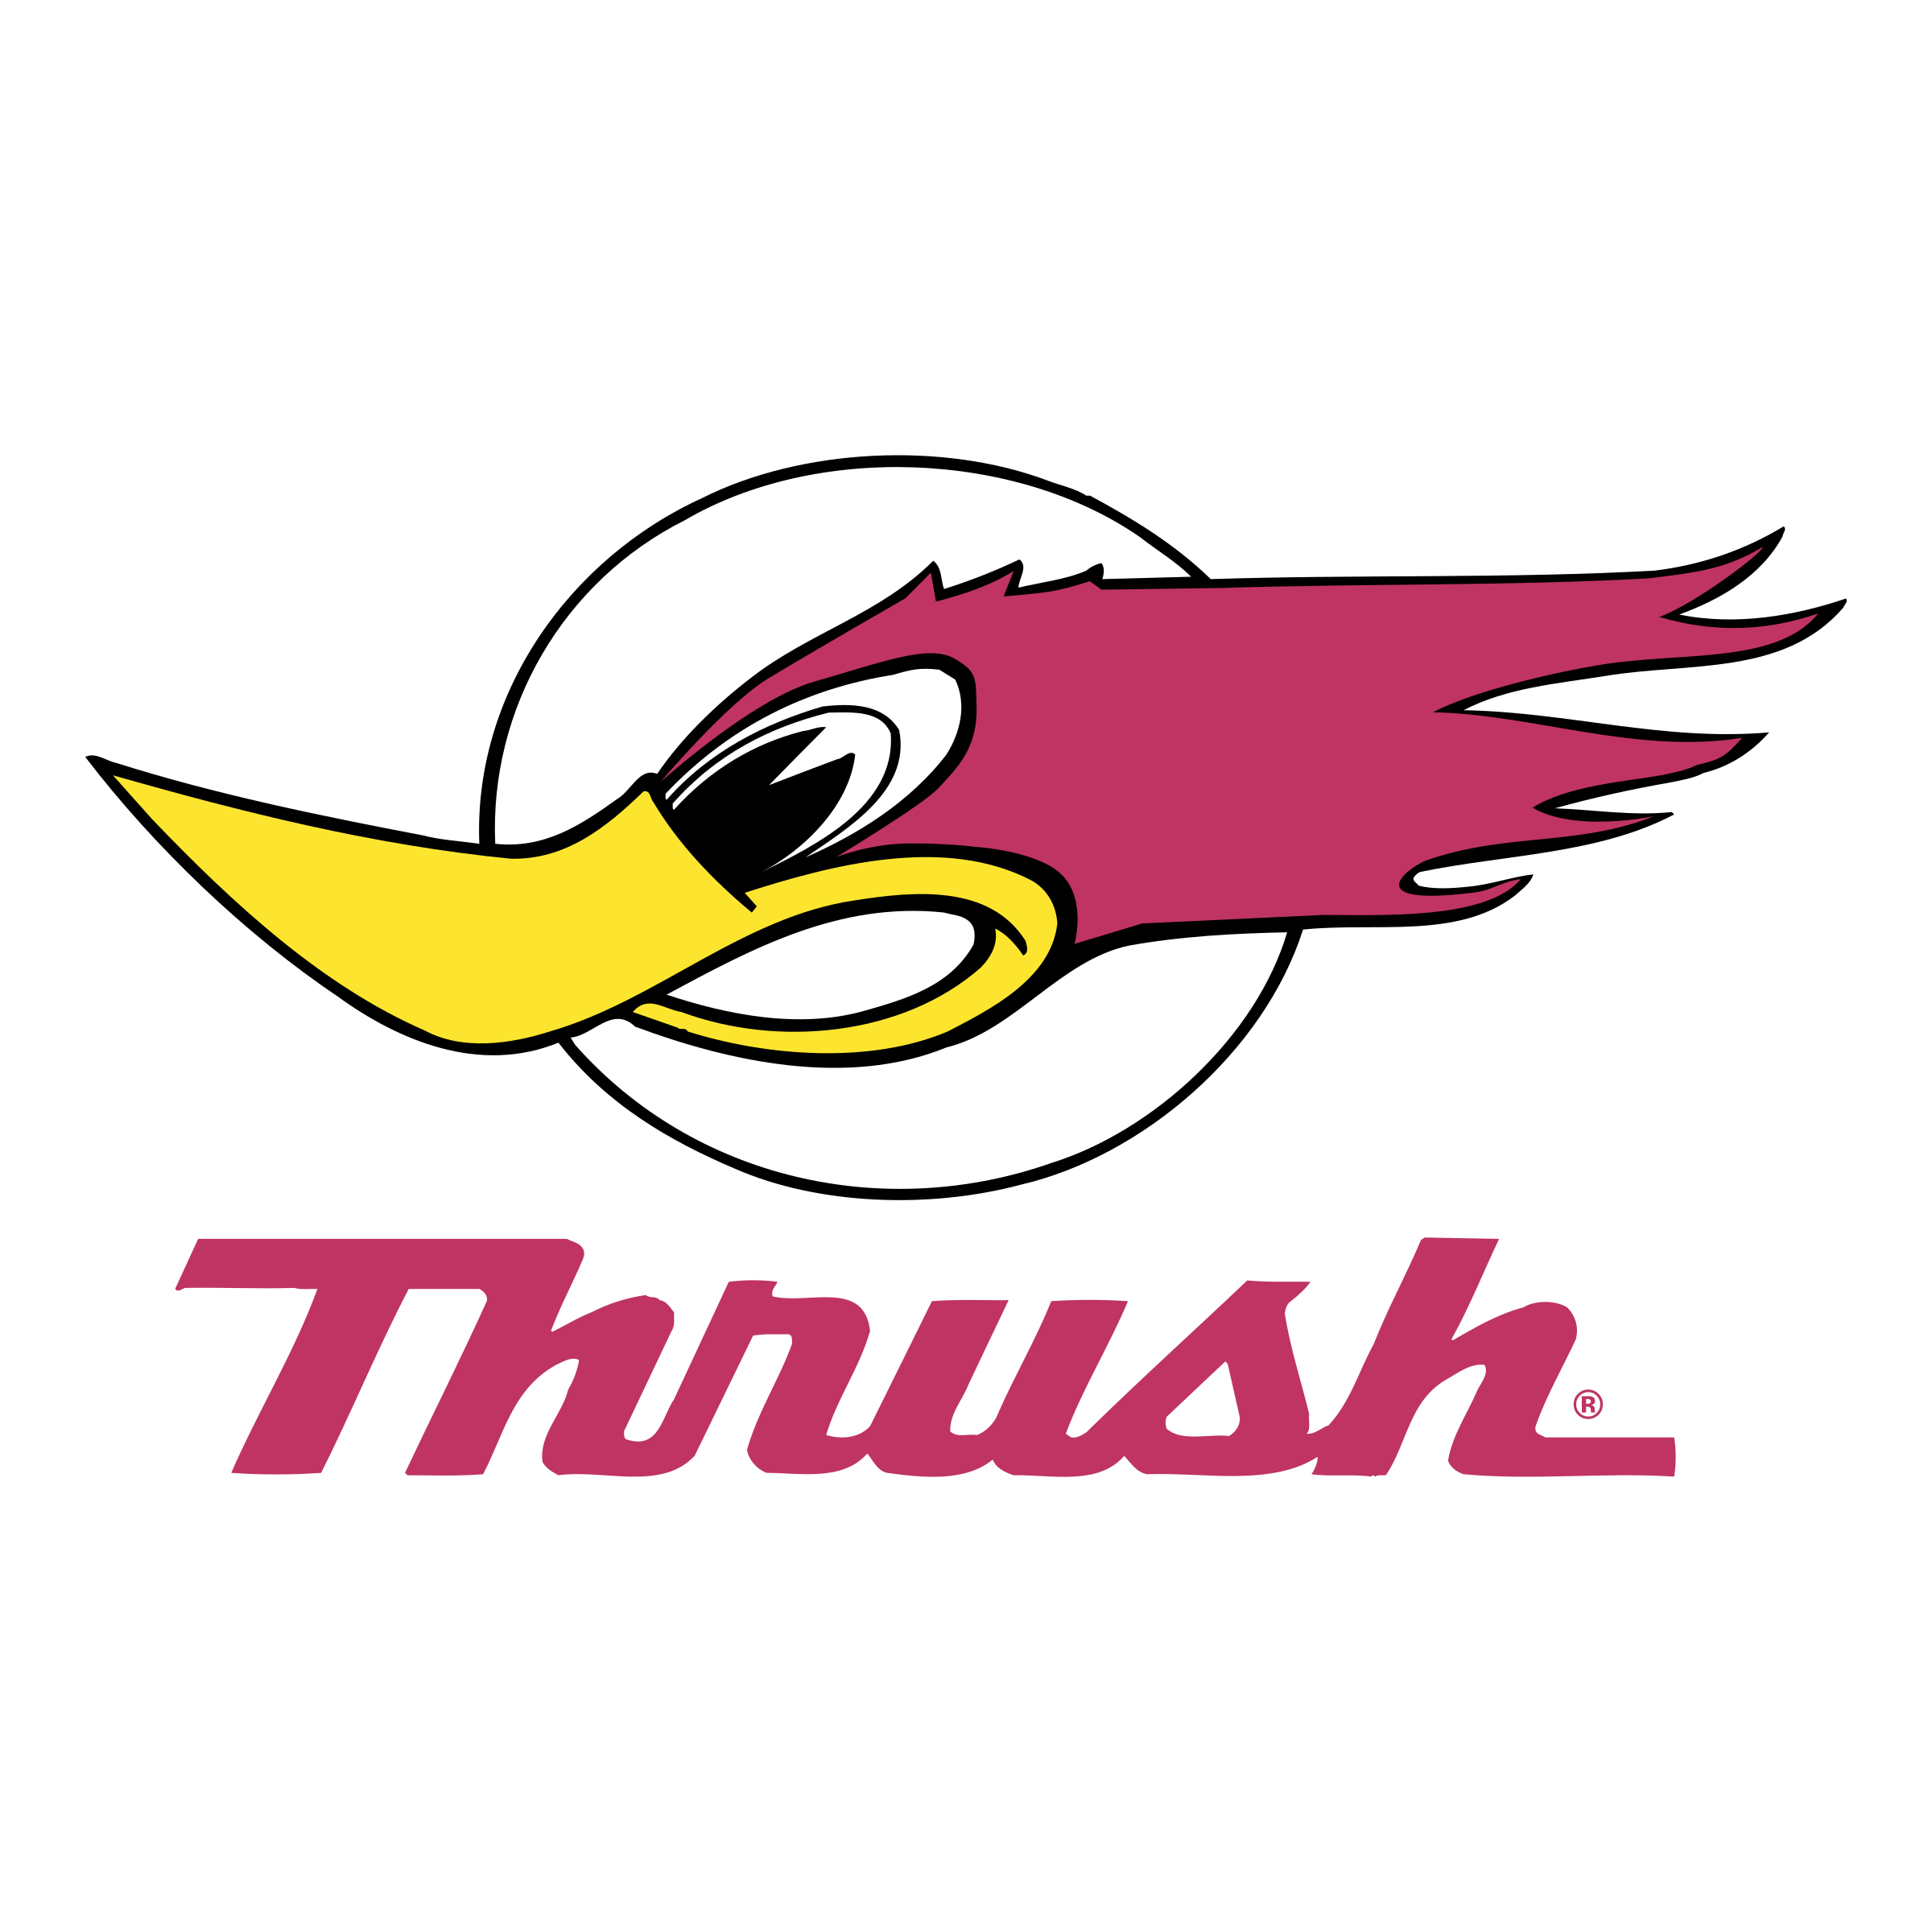 Thrush Logo - Thrush Logo PNG Transparent & SVG Vector - Freebie Supply